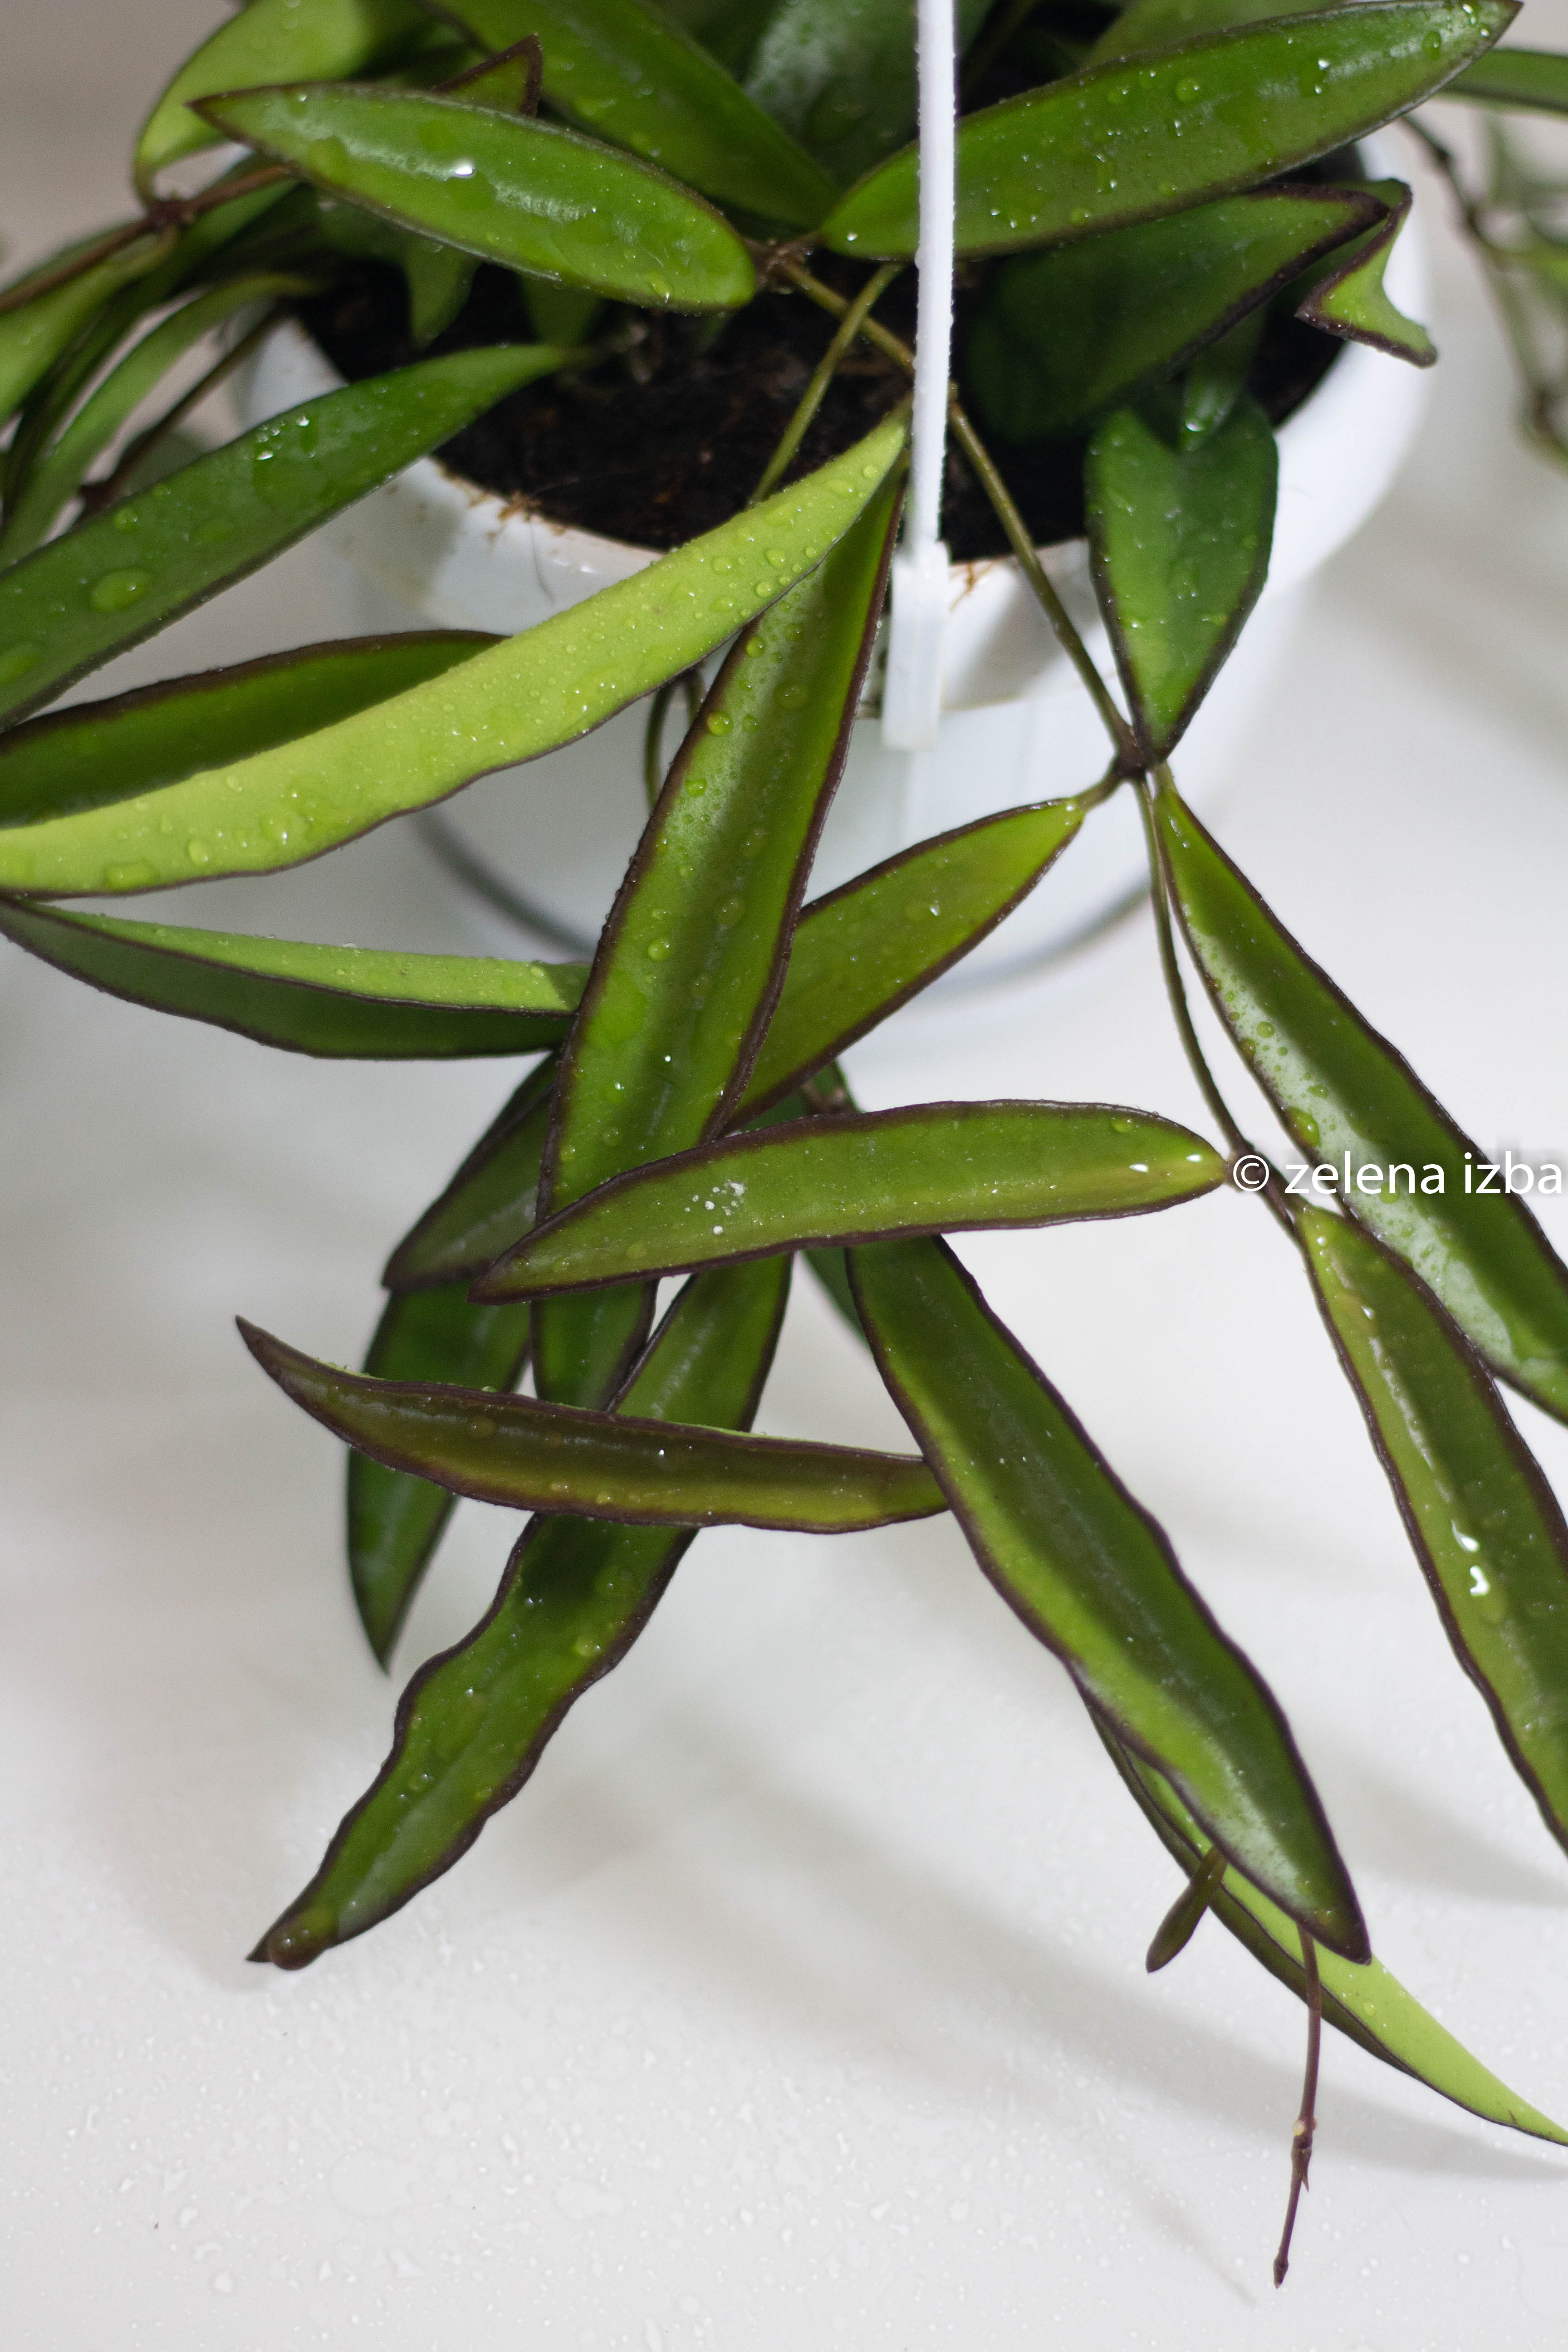 Hoya longifolia "L"